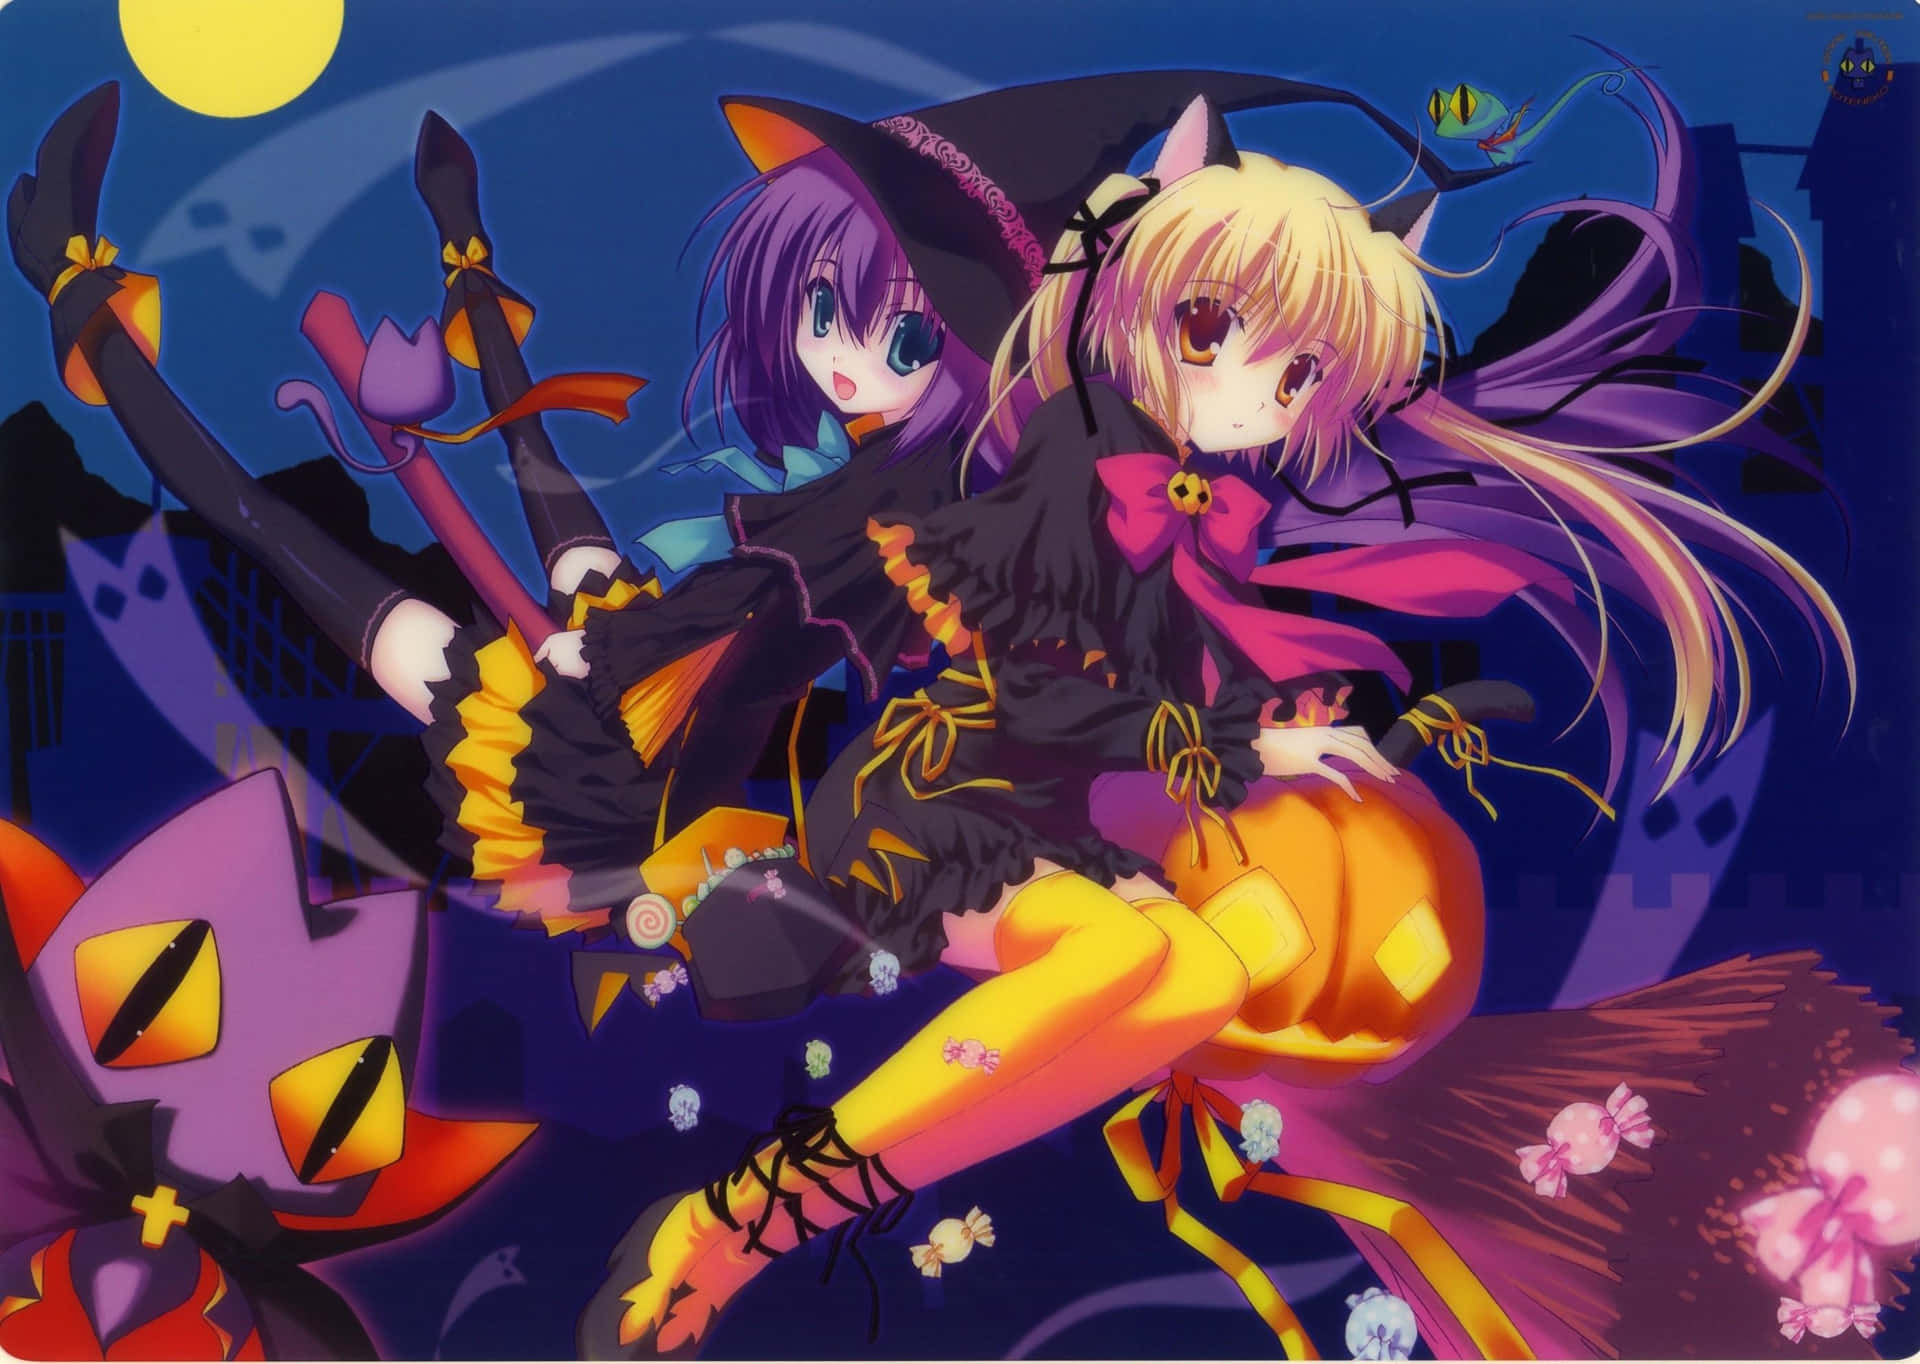 Spooky Halloween Anime Girl with Ghostly Sidekick Wallpaper